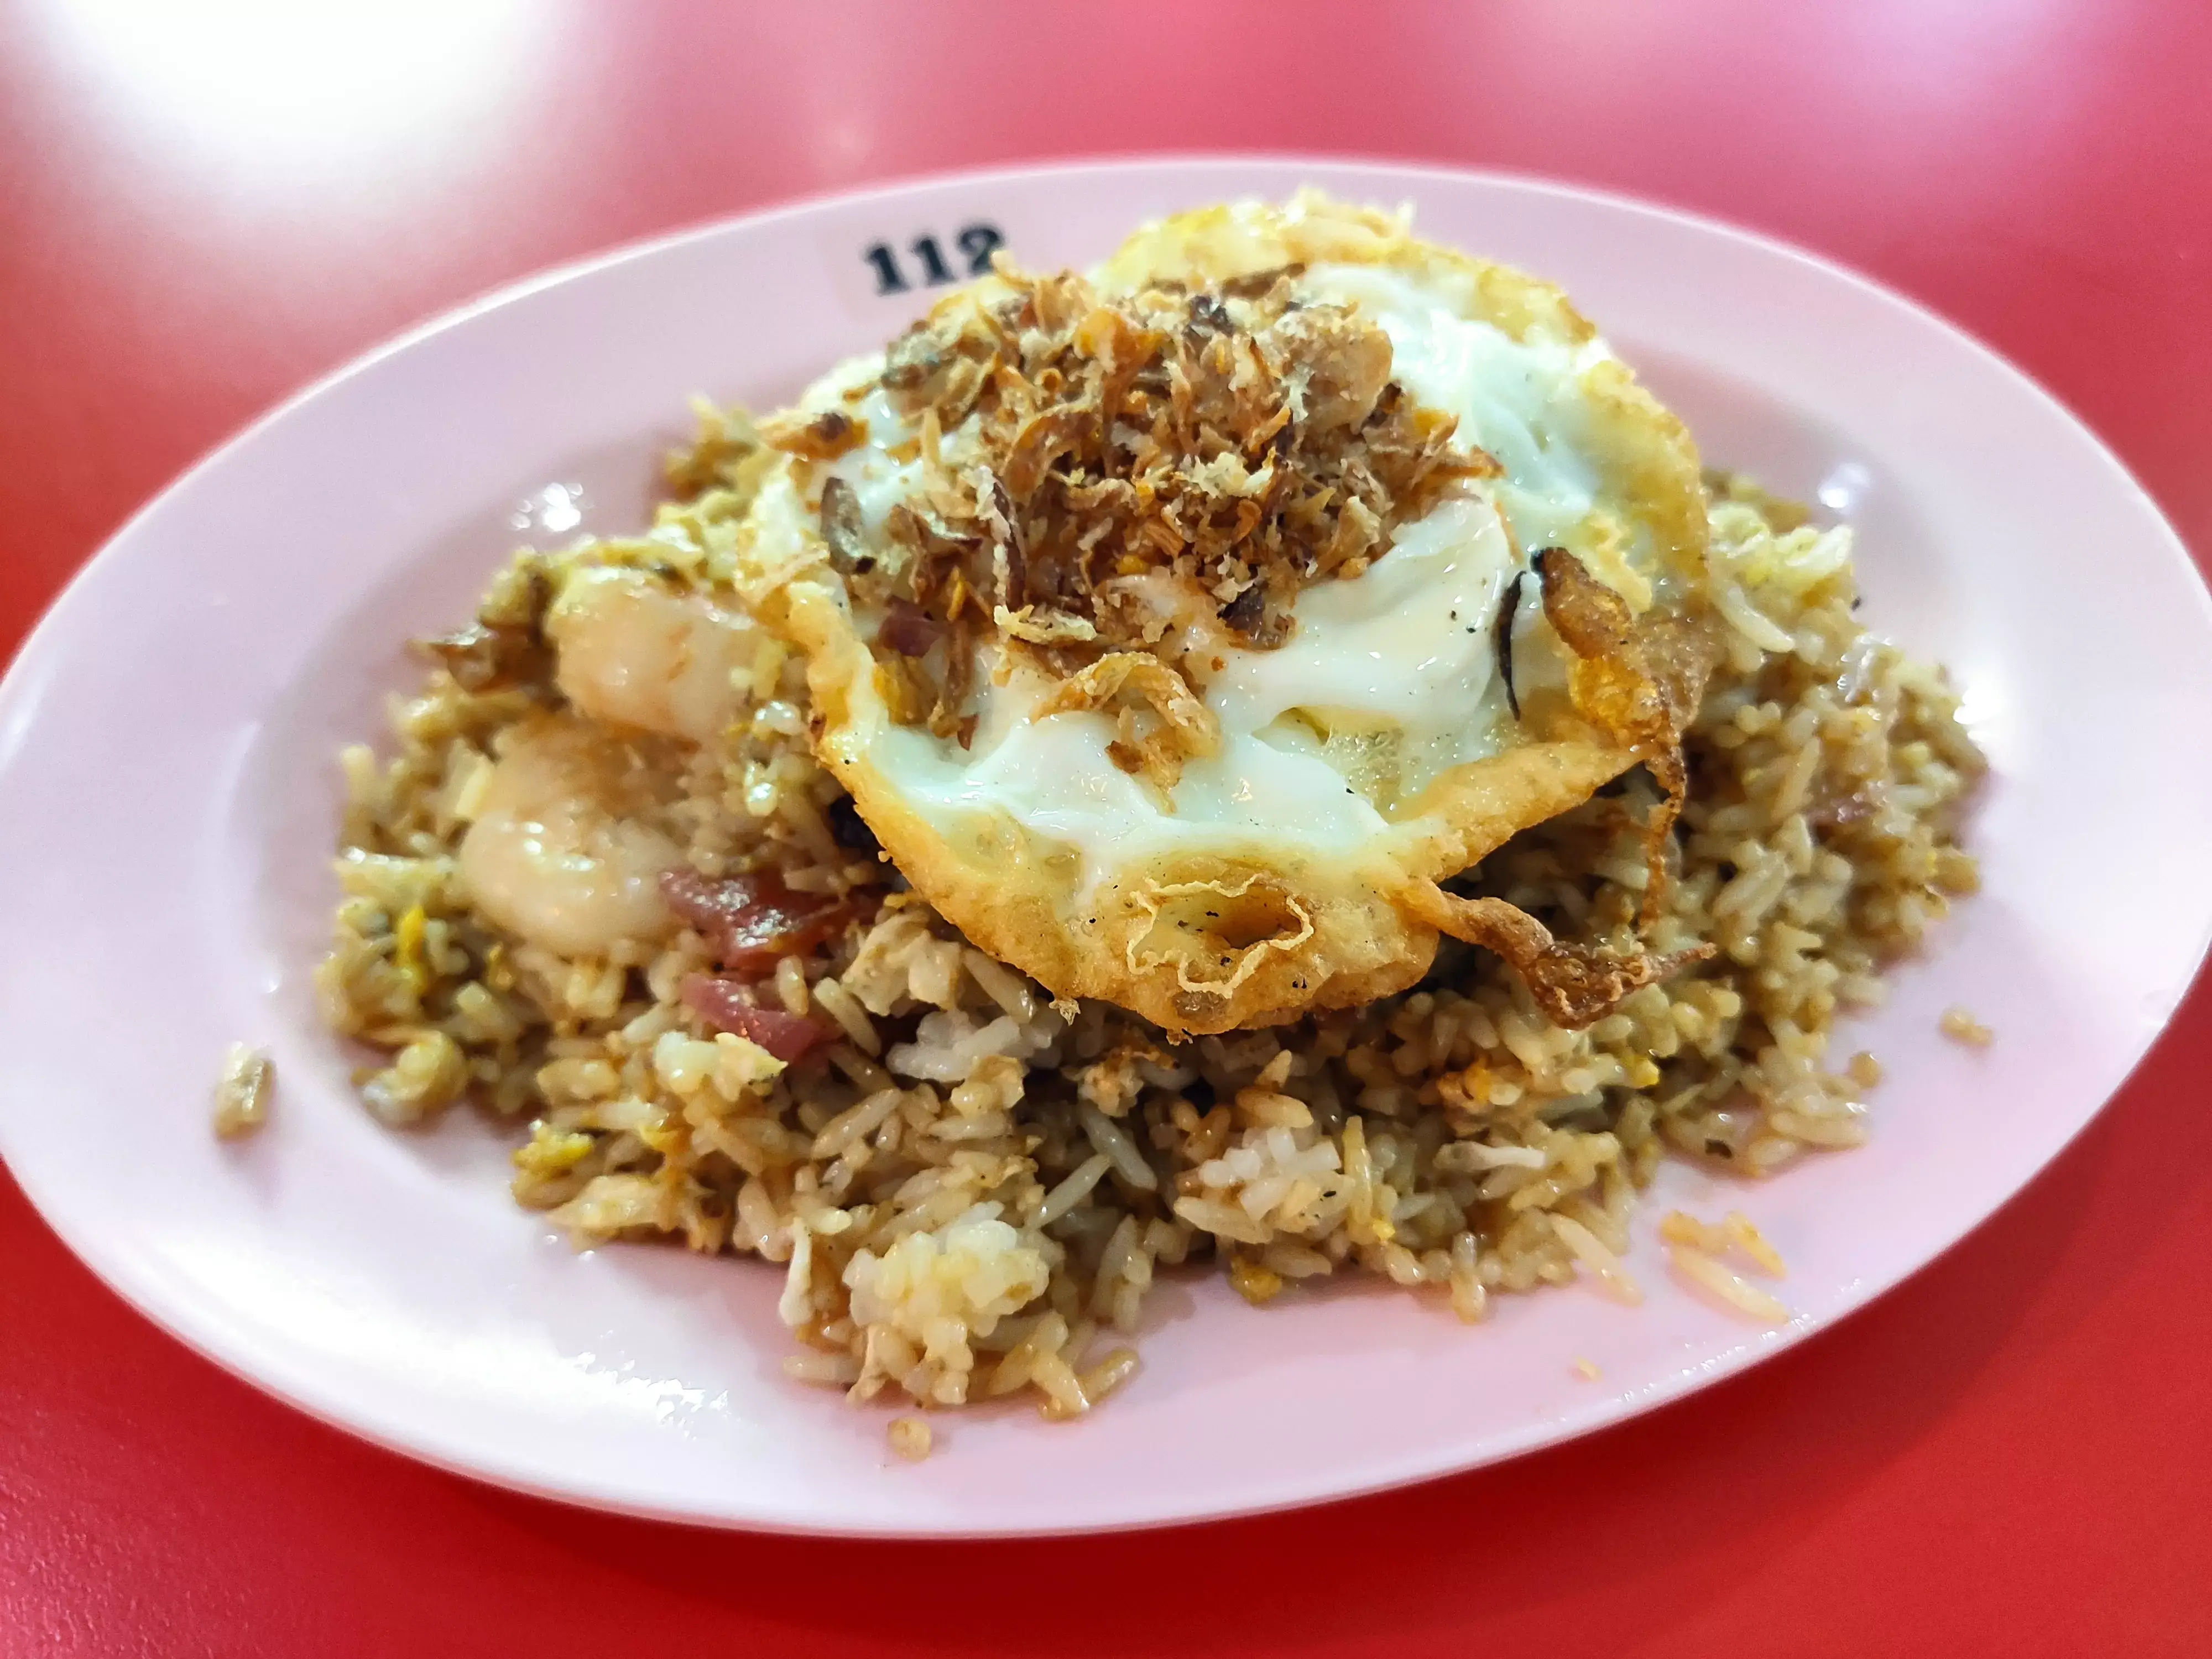 Jason Penang Cuisine: Fried Rice